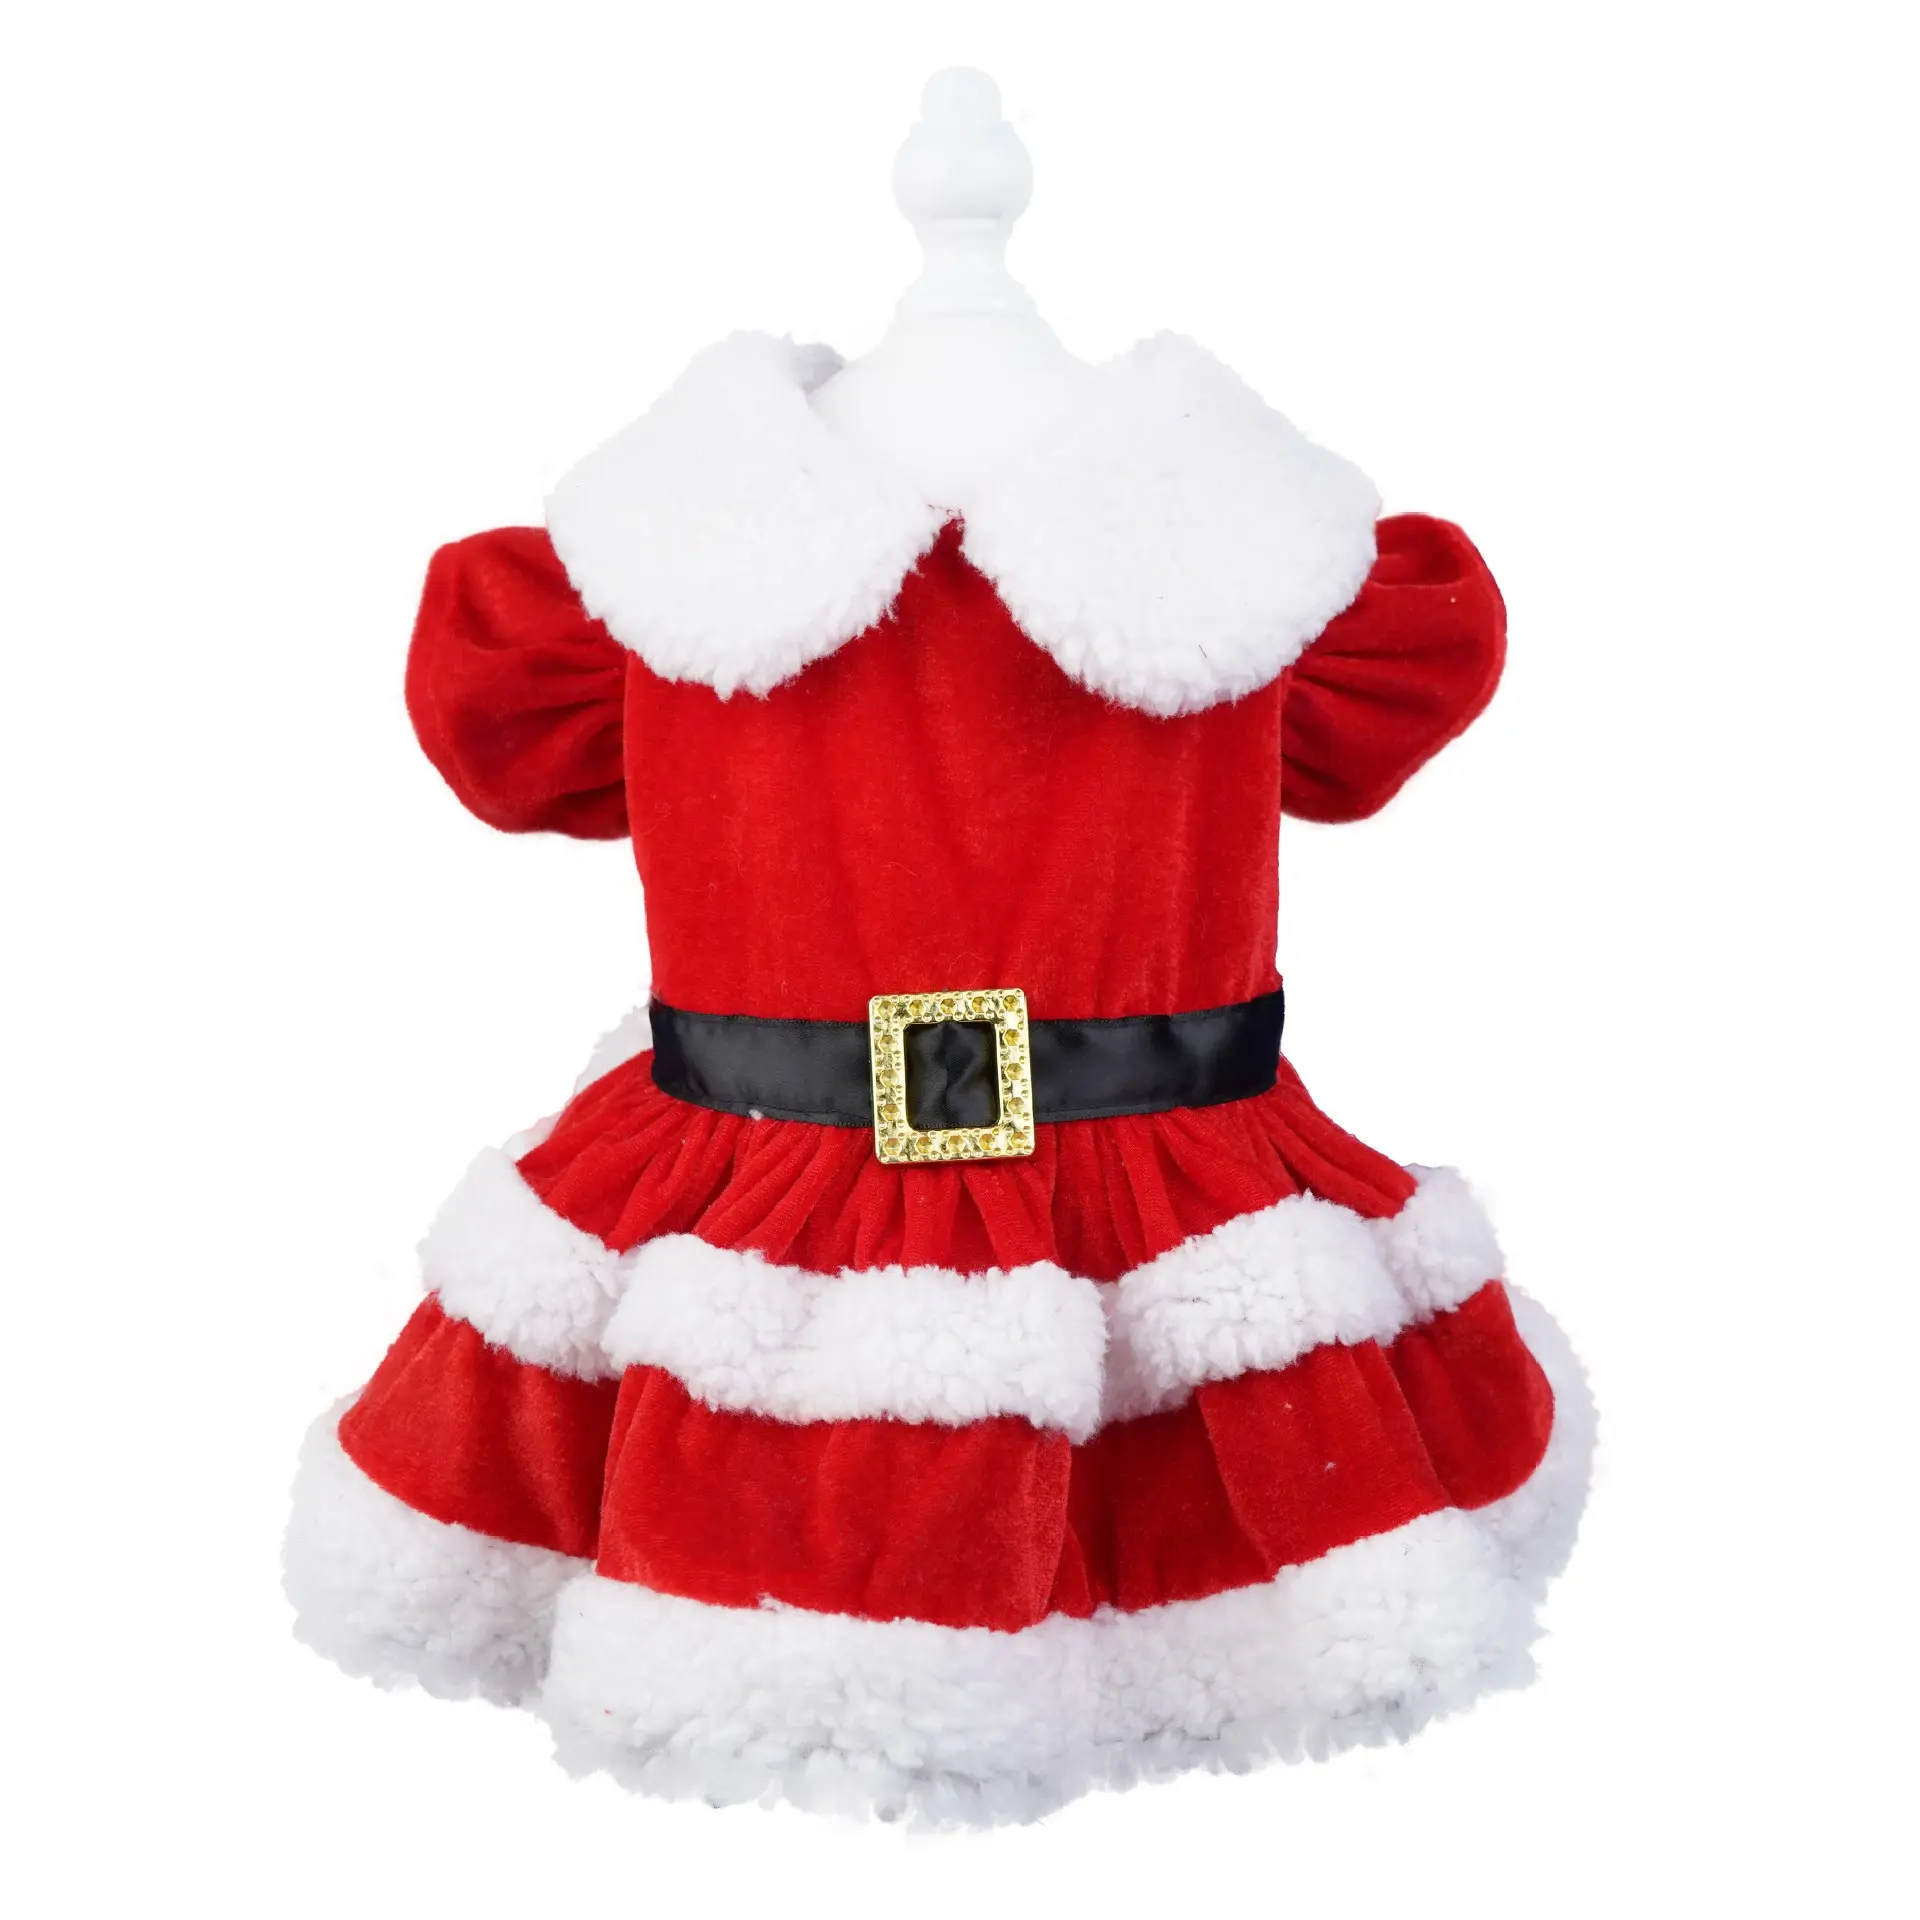 CustomNewペットコスチュームクリスマスホリデーパーティーサンタクロースドレスアップ犬新年の服